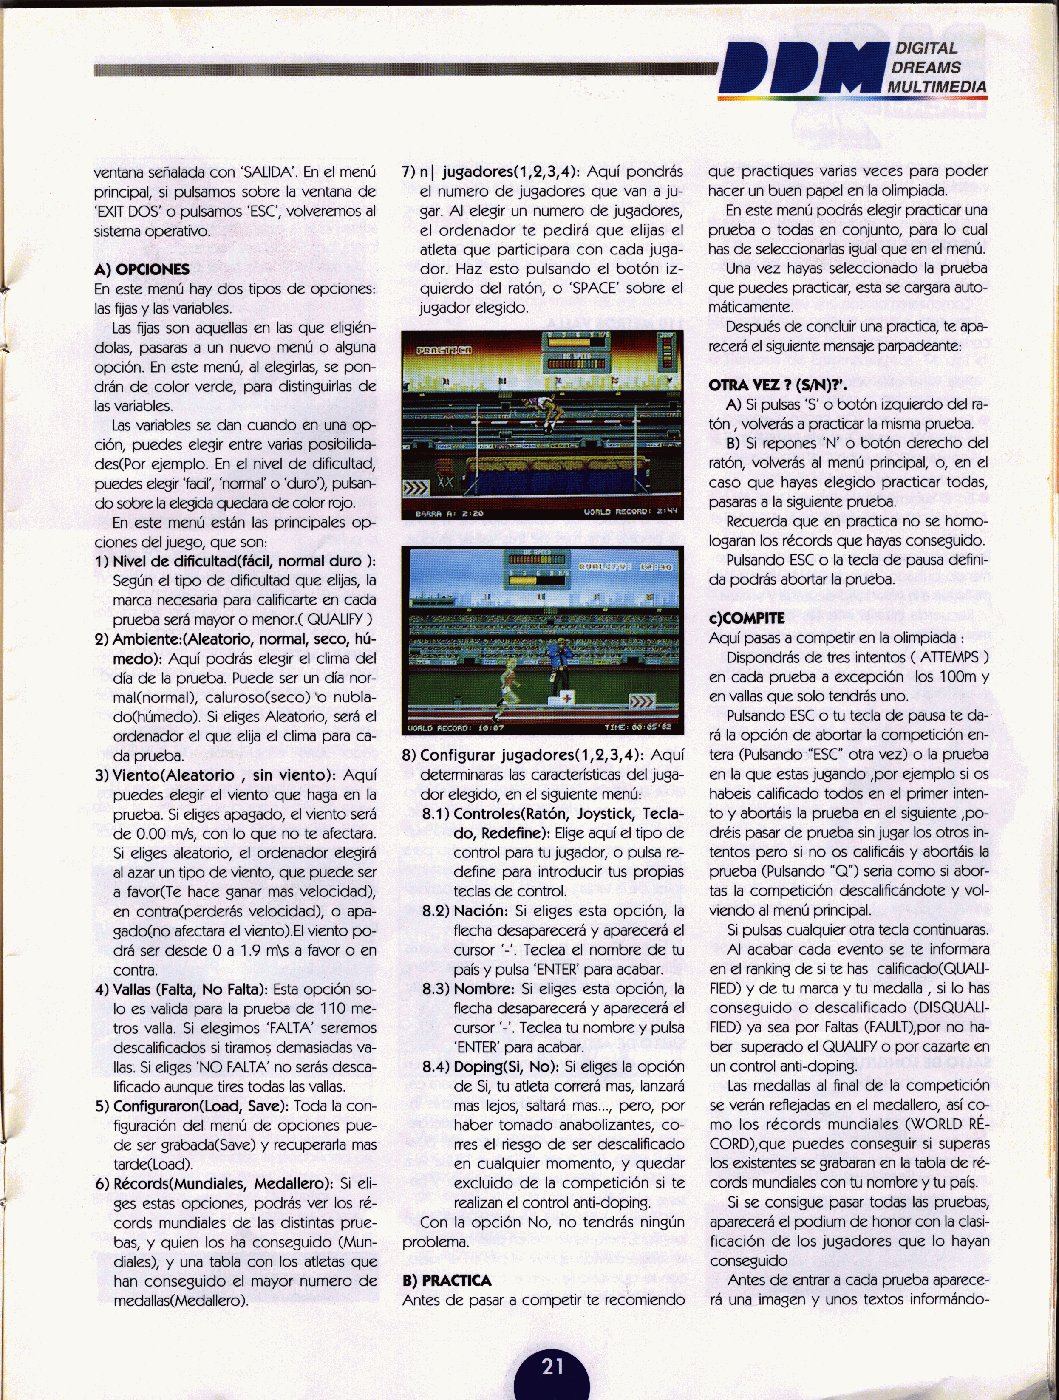 Gameart de Olympic Games 92' para PC